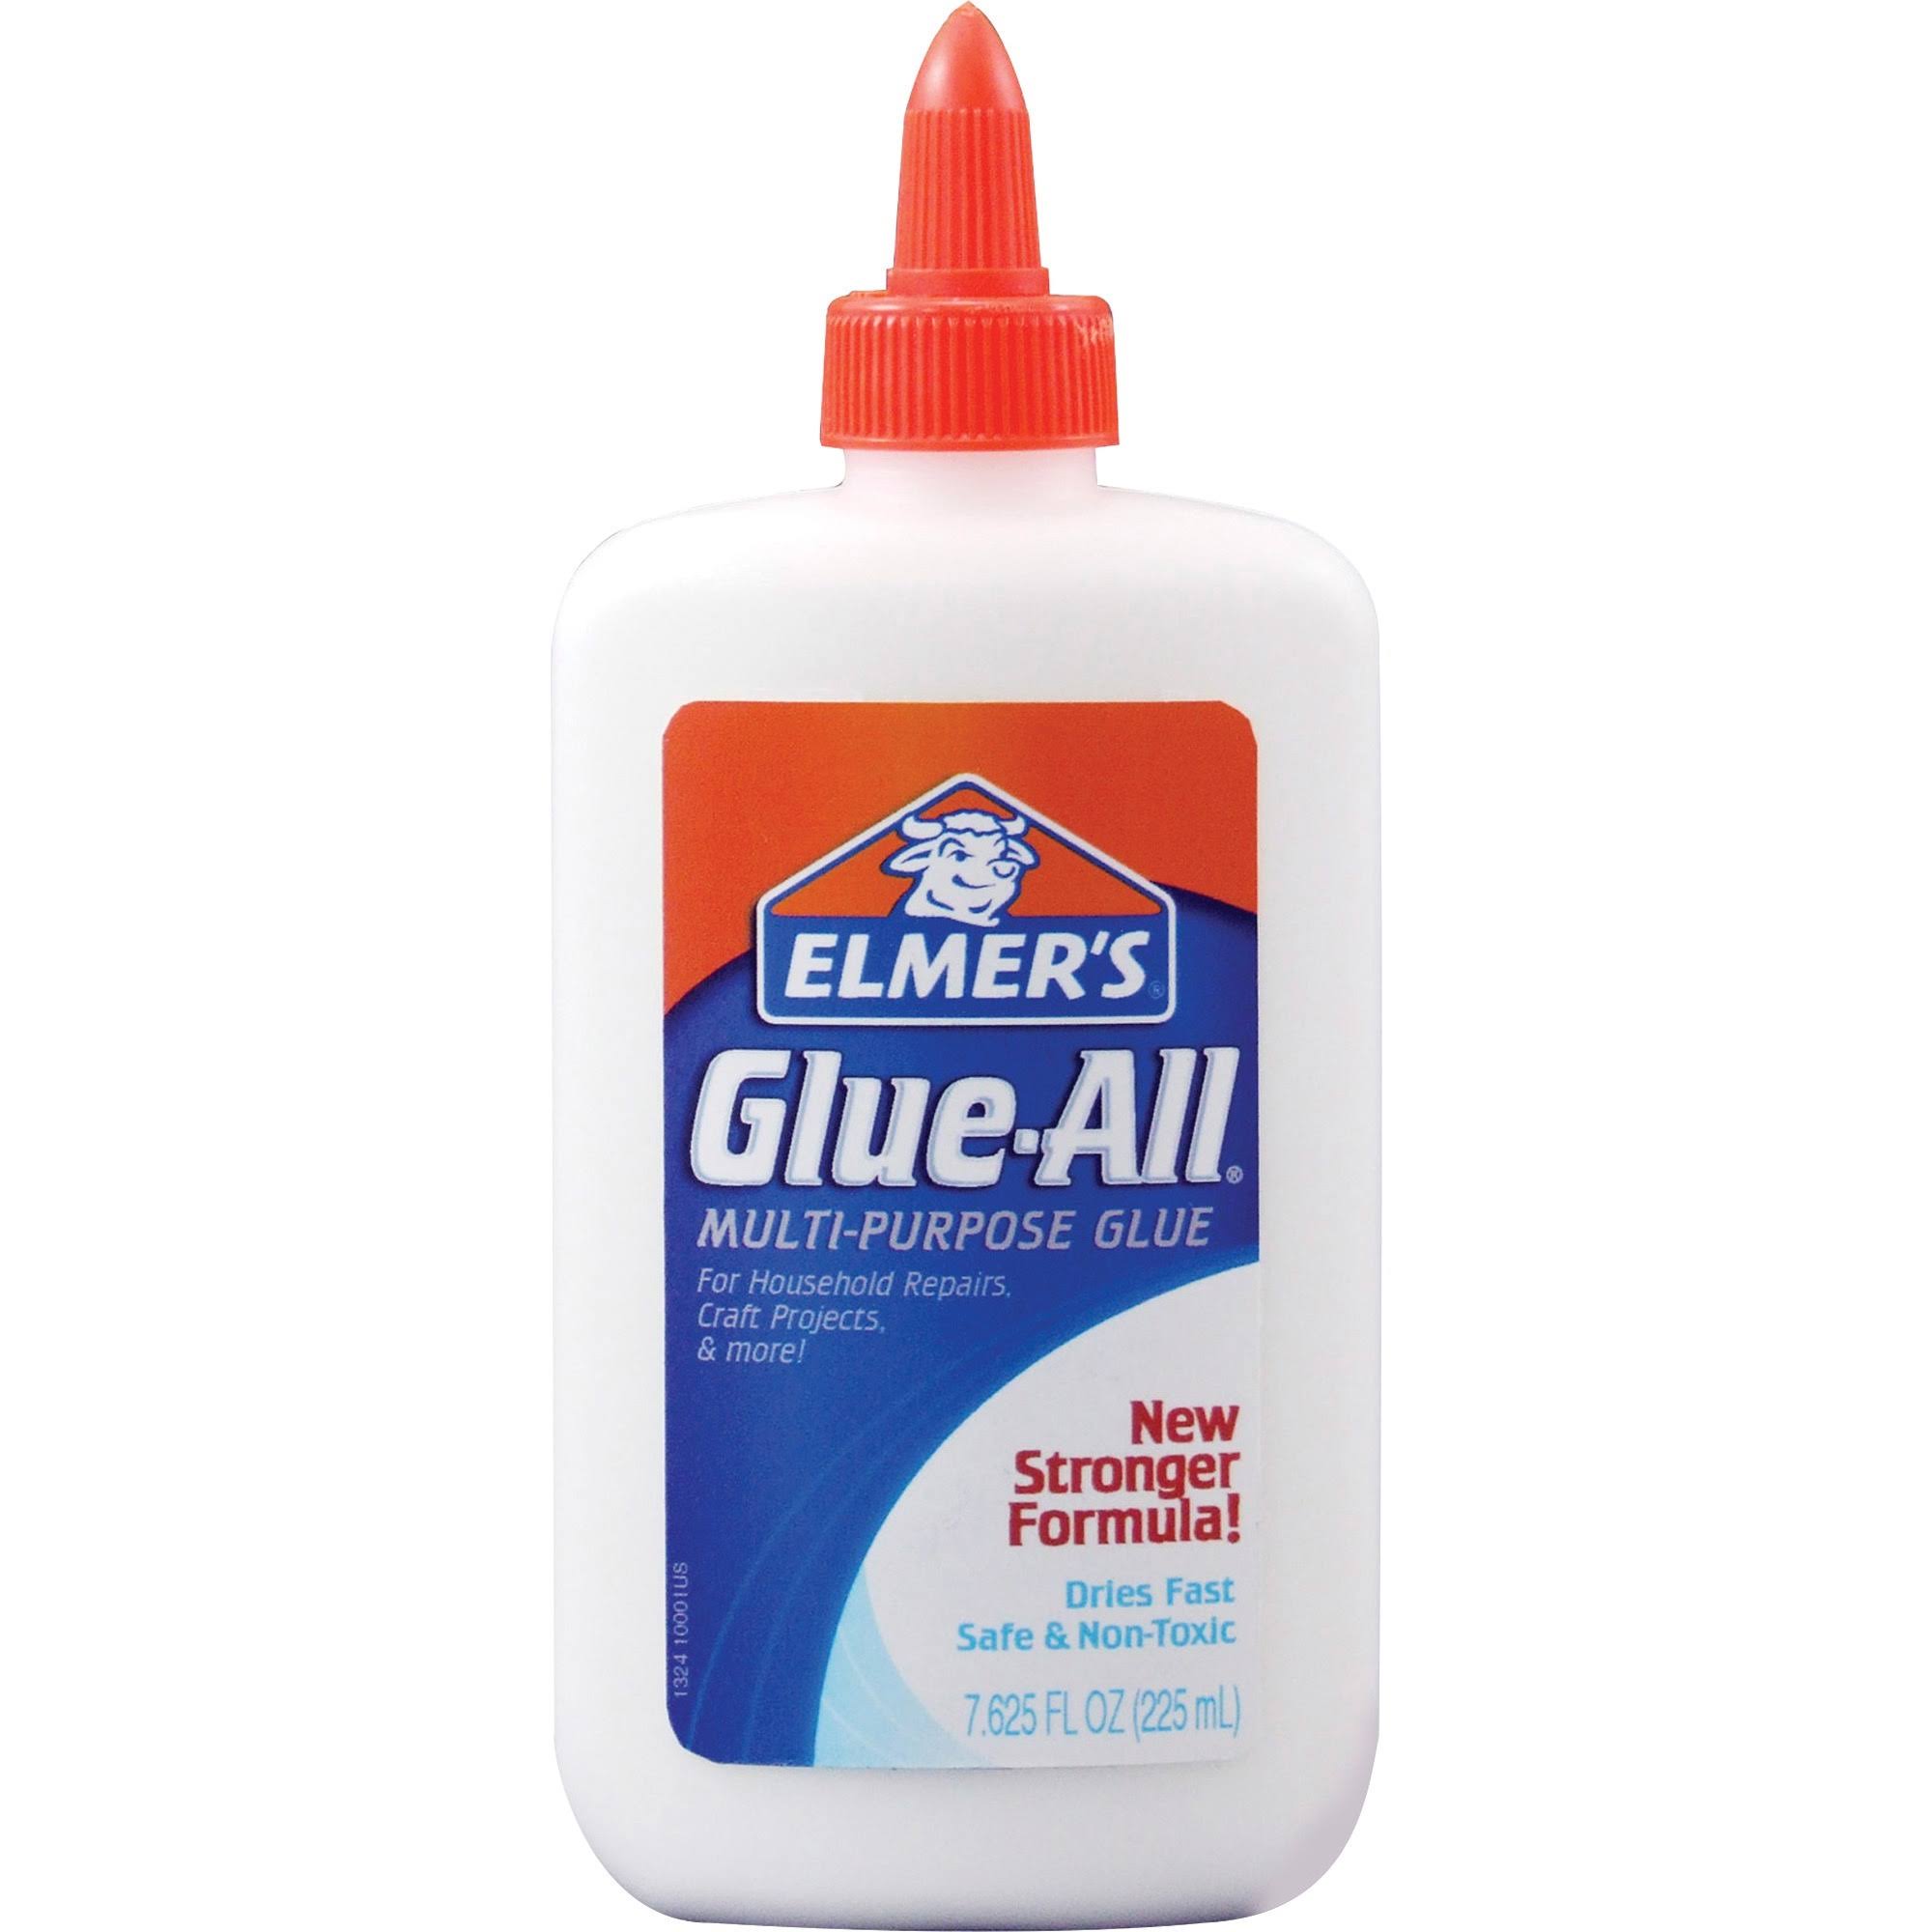 Elmer's Glue-All Multi-Purpose Glue - 225ml, Extra Strong